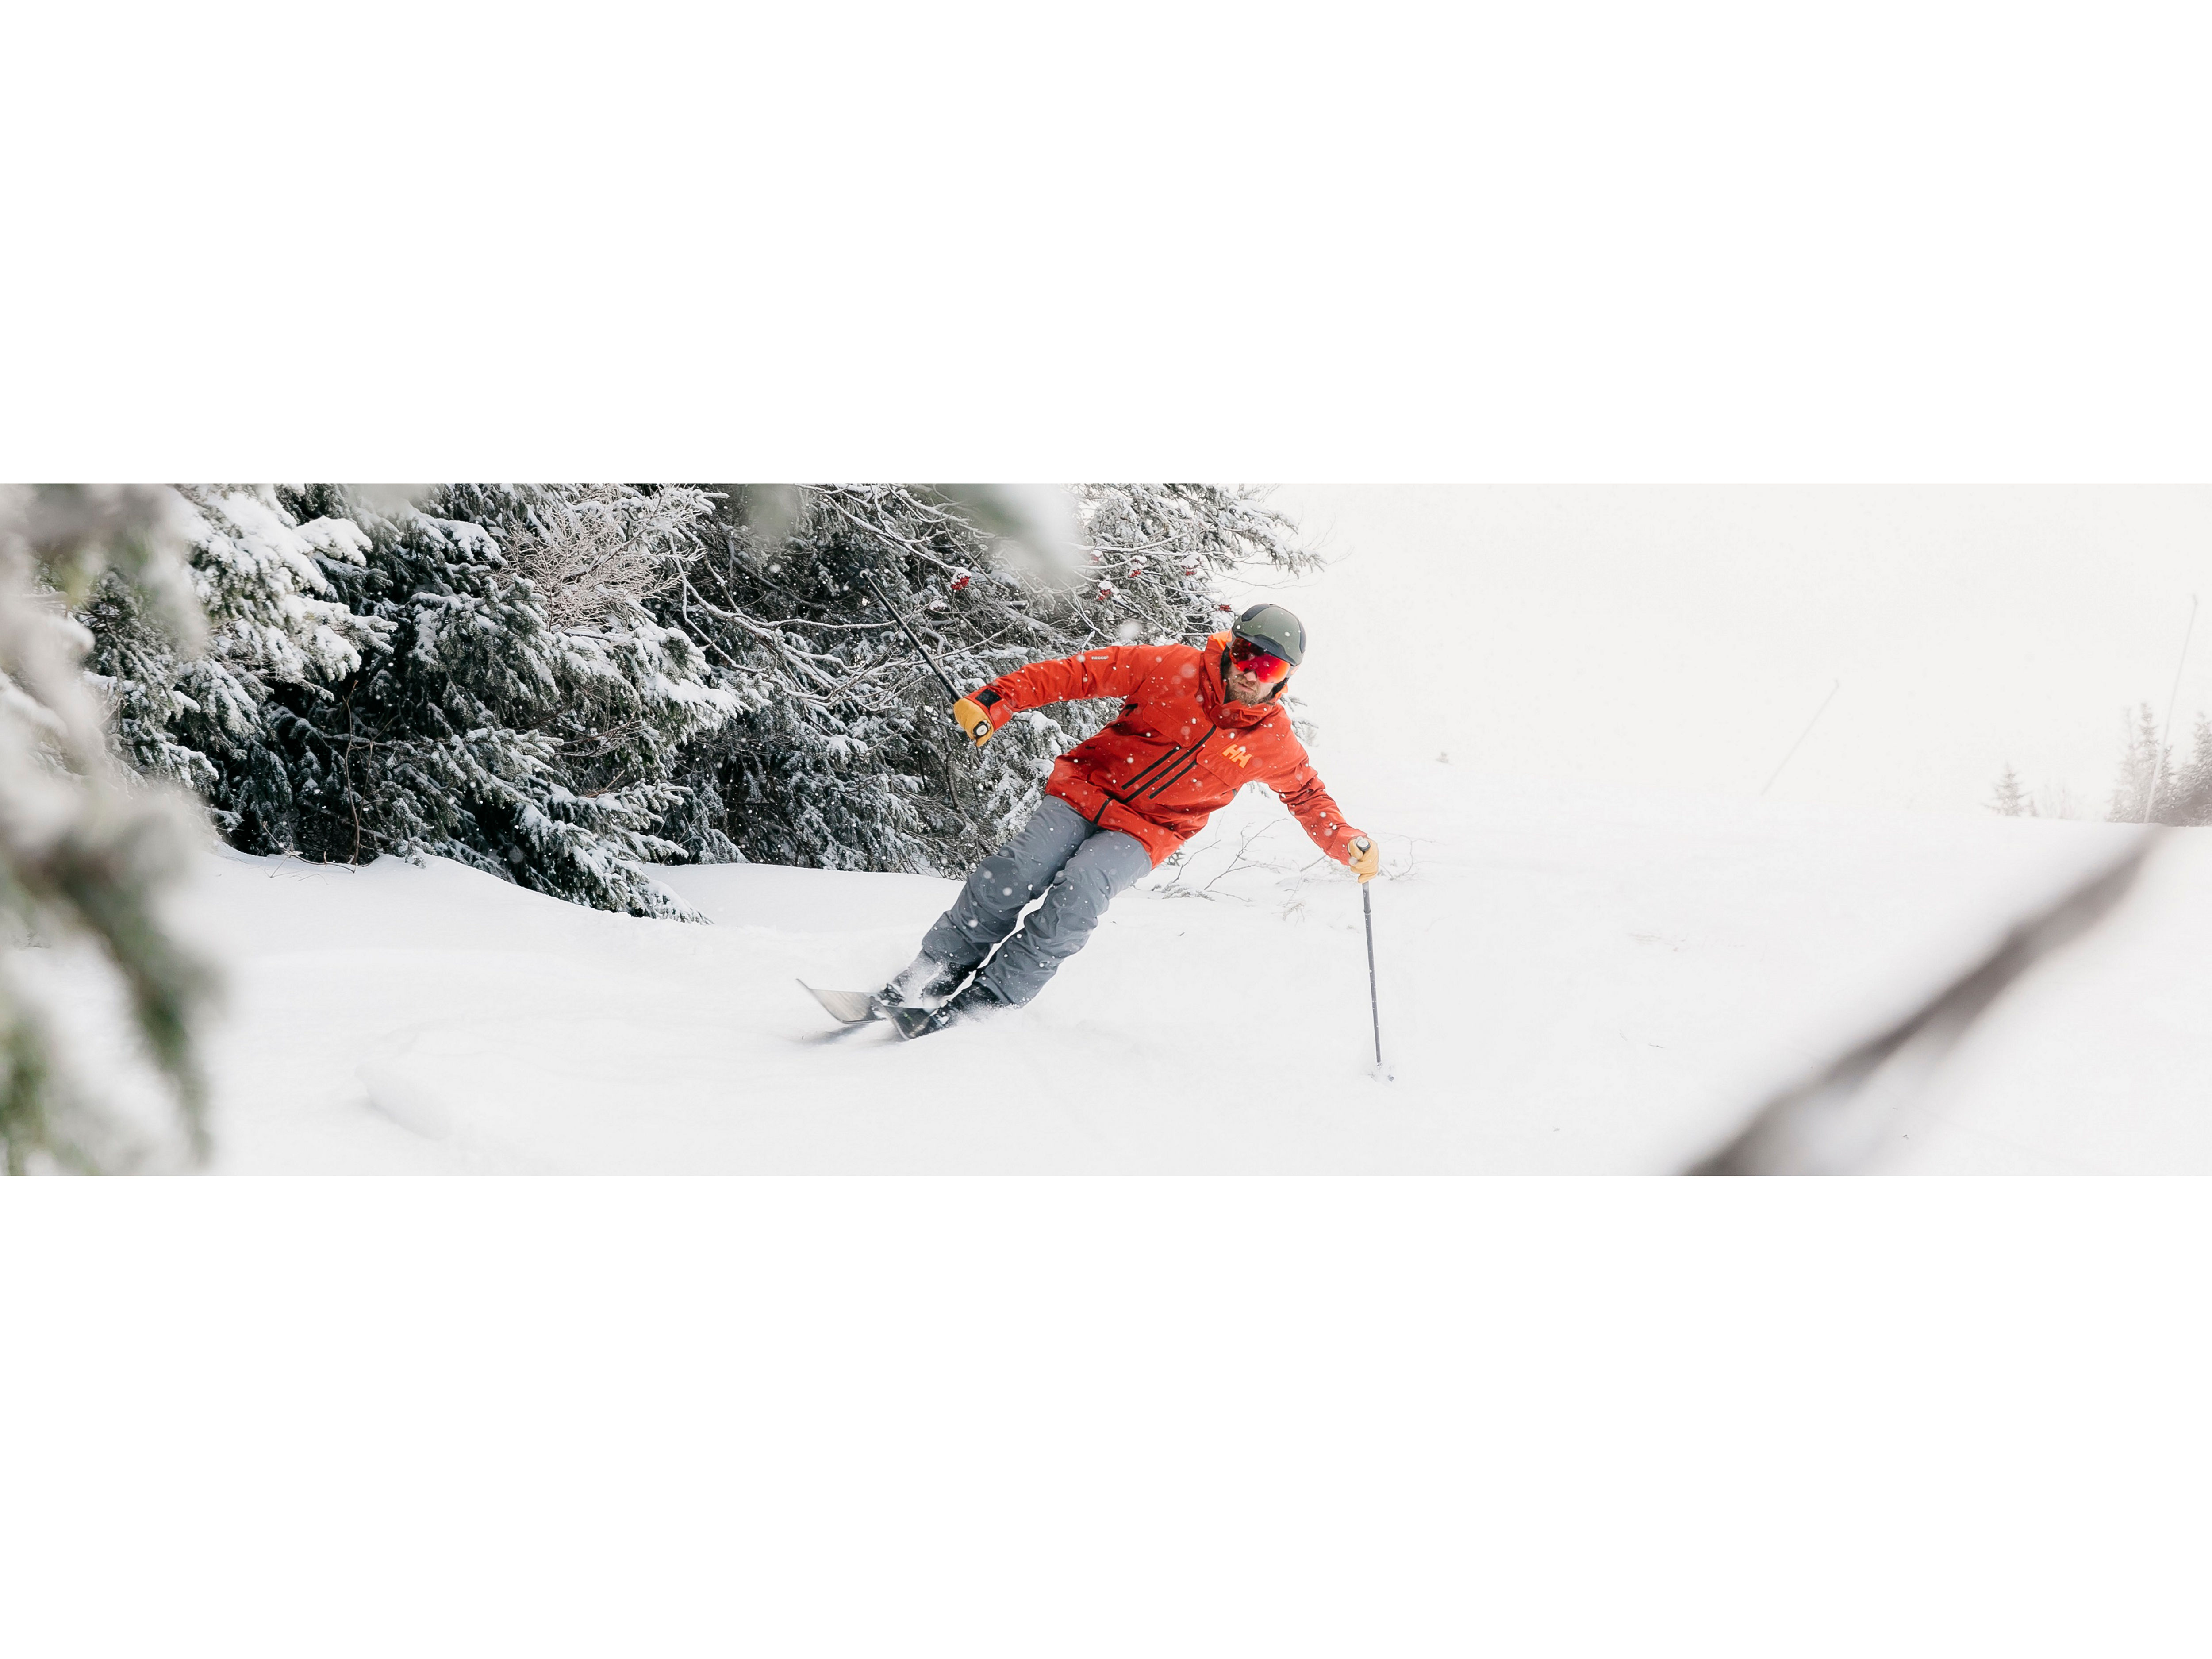 Online Ski Shop, Ski Gear Companies, Snowboarding Attire, Top Online  Snowboard Shops